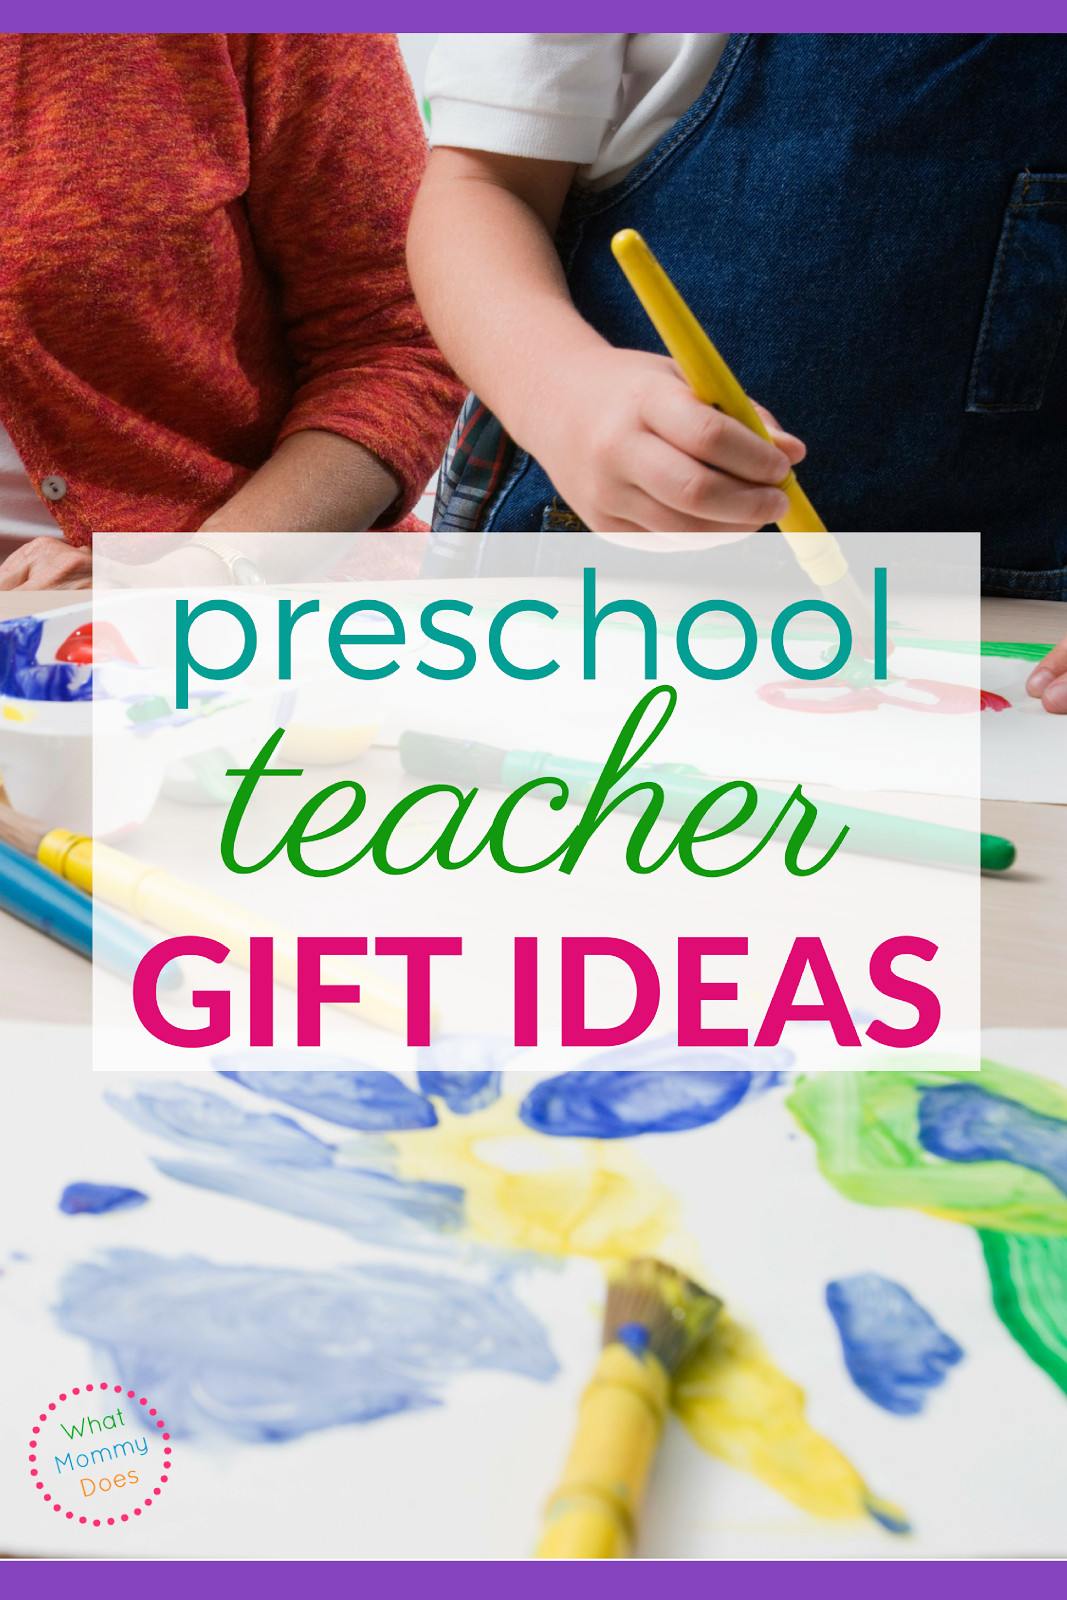 Preschool Teacher Christmas Gift Ideas
 Preschool Teacher Gift Ideas What Mommy Does